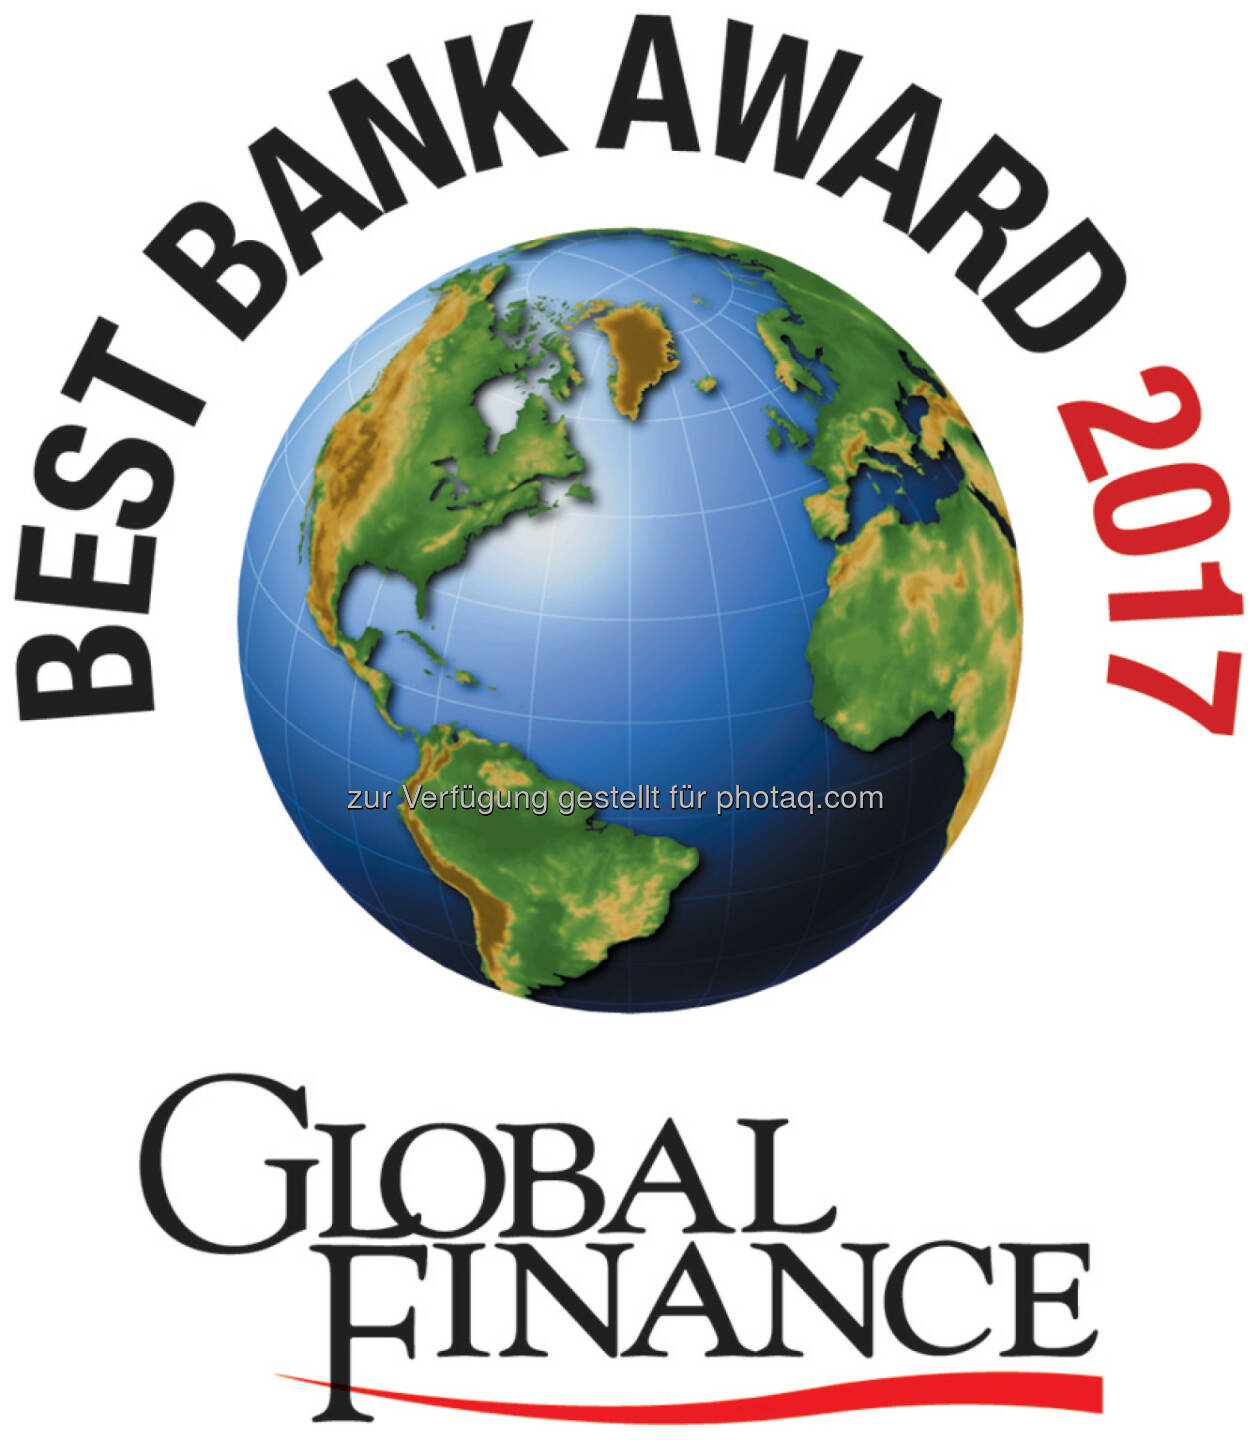 Best Bank Award 2017 - Global Finance